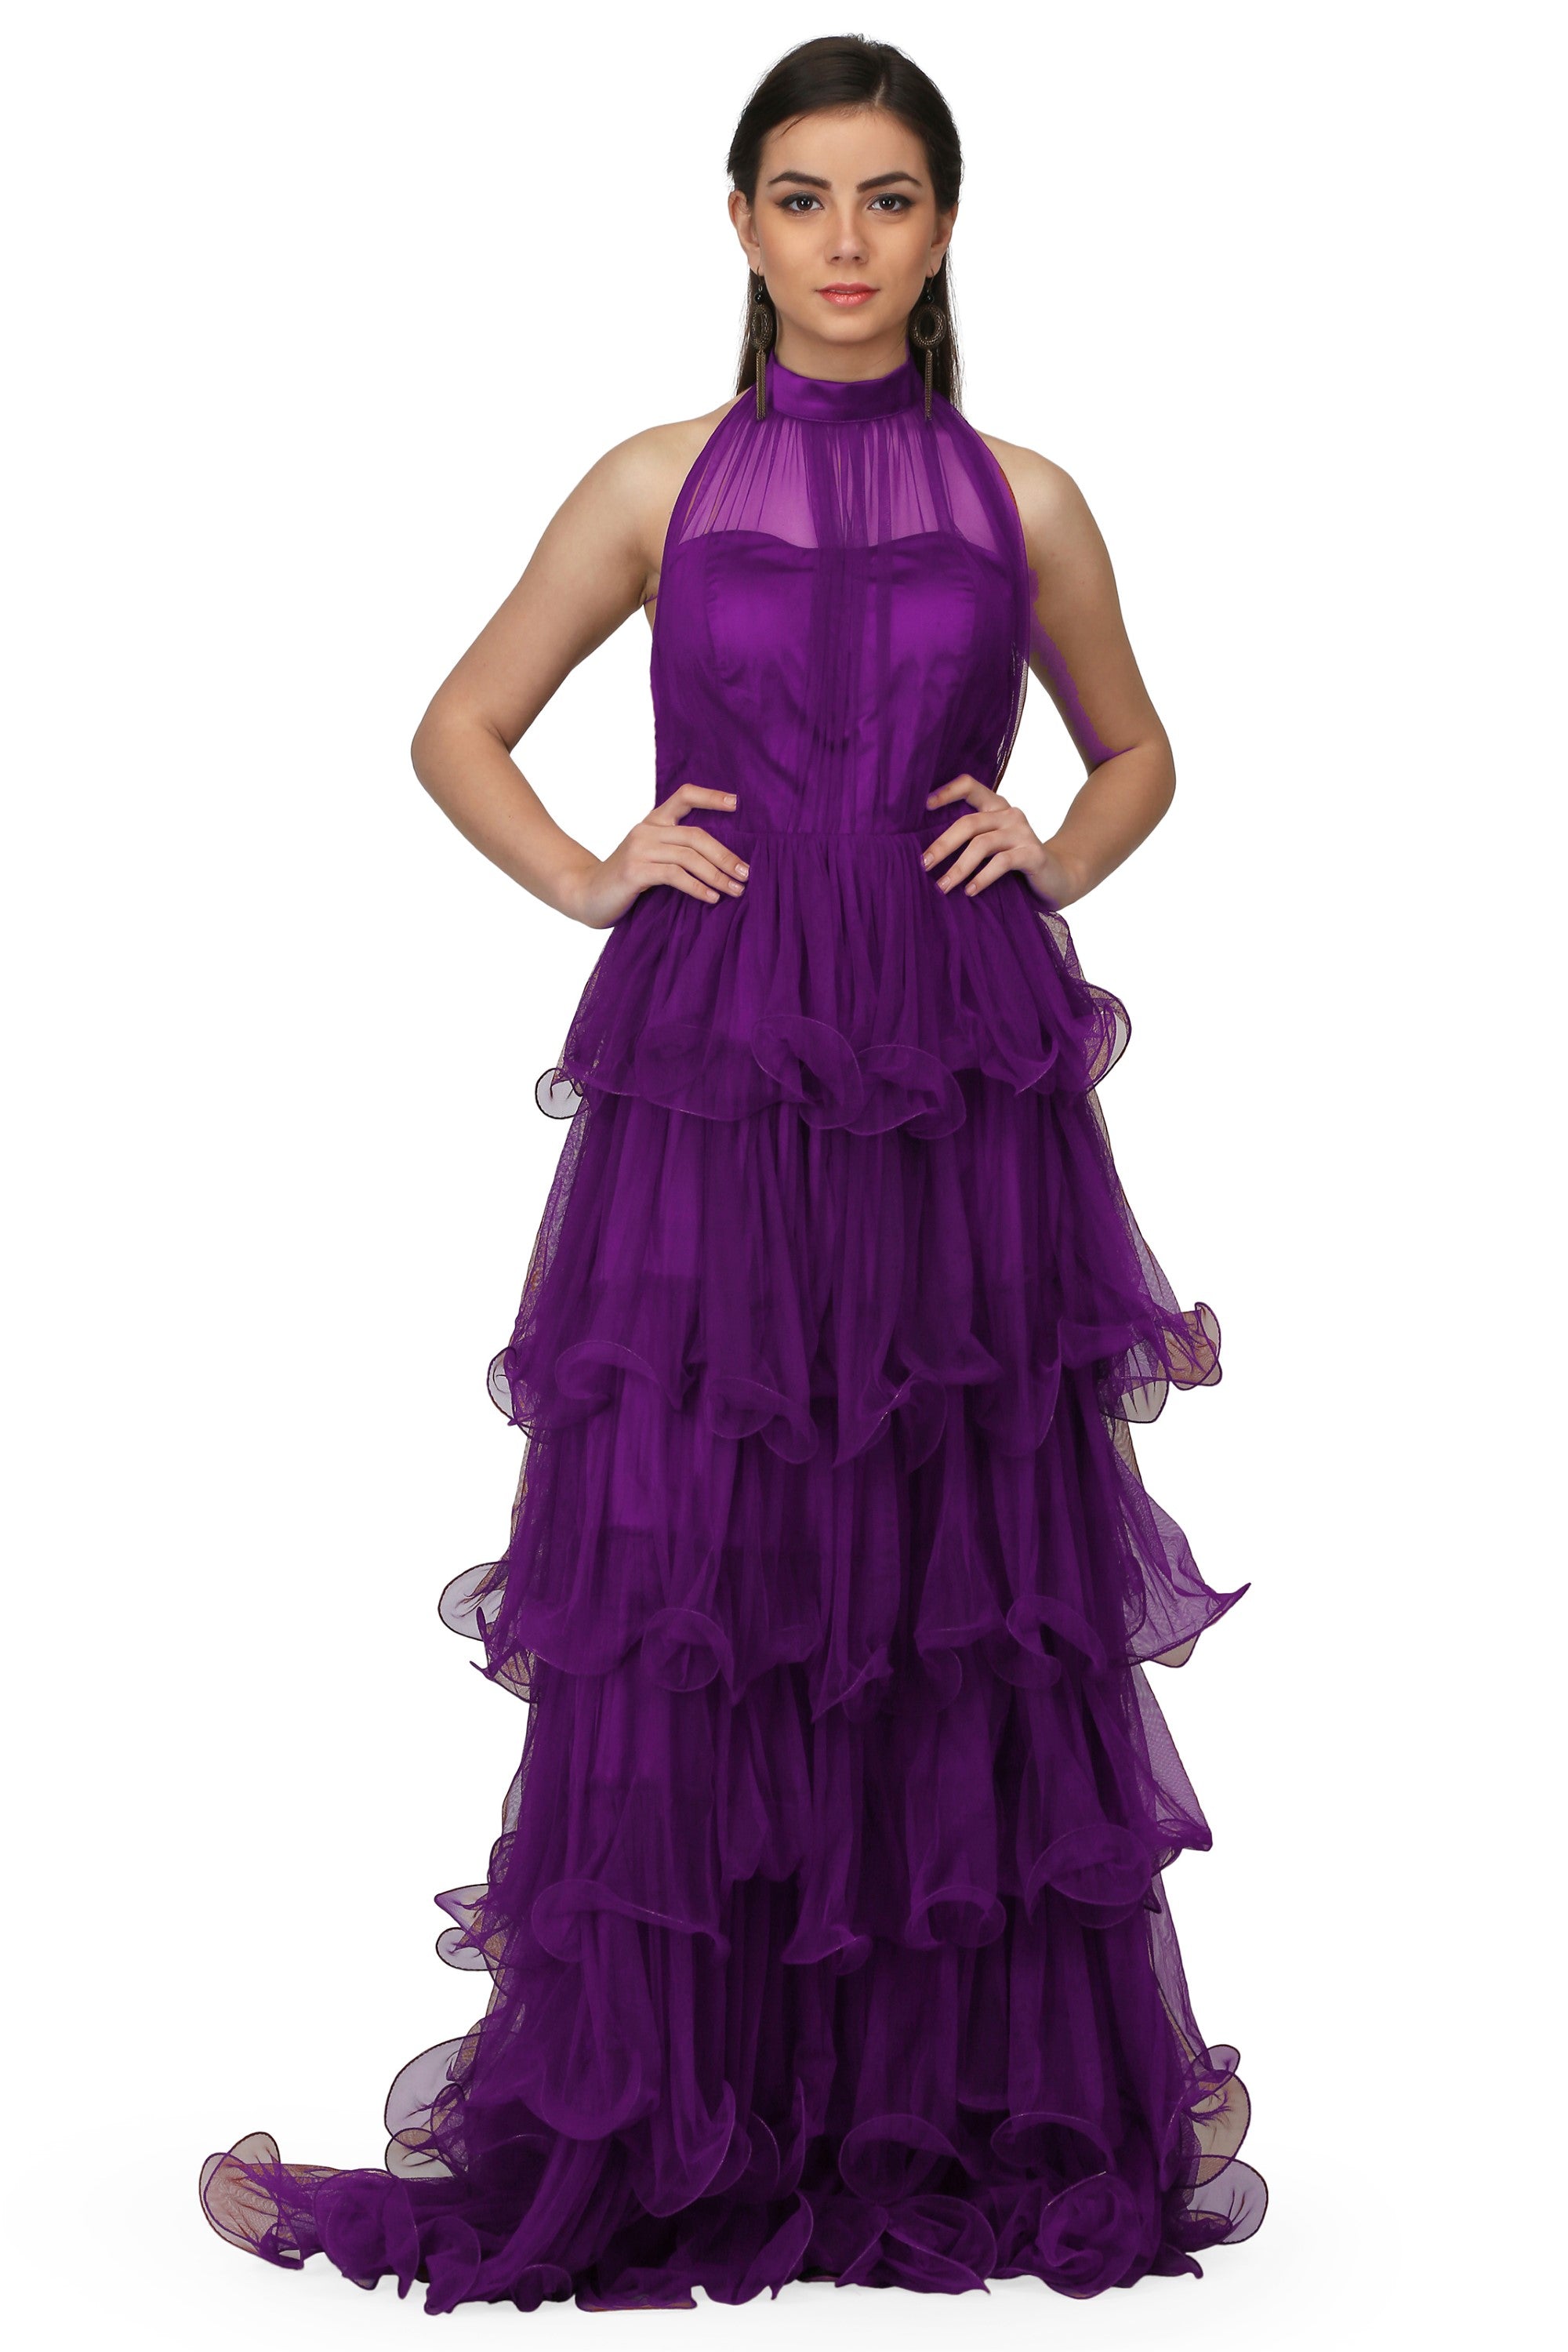 Women's Halter Neck Drape Net  Corset Gown In Purple - MIRACOLOS by Ruchi